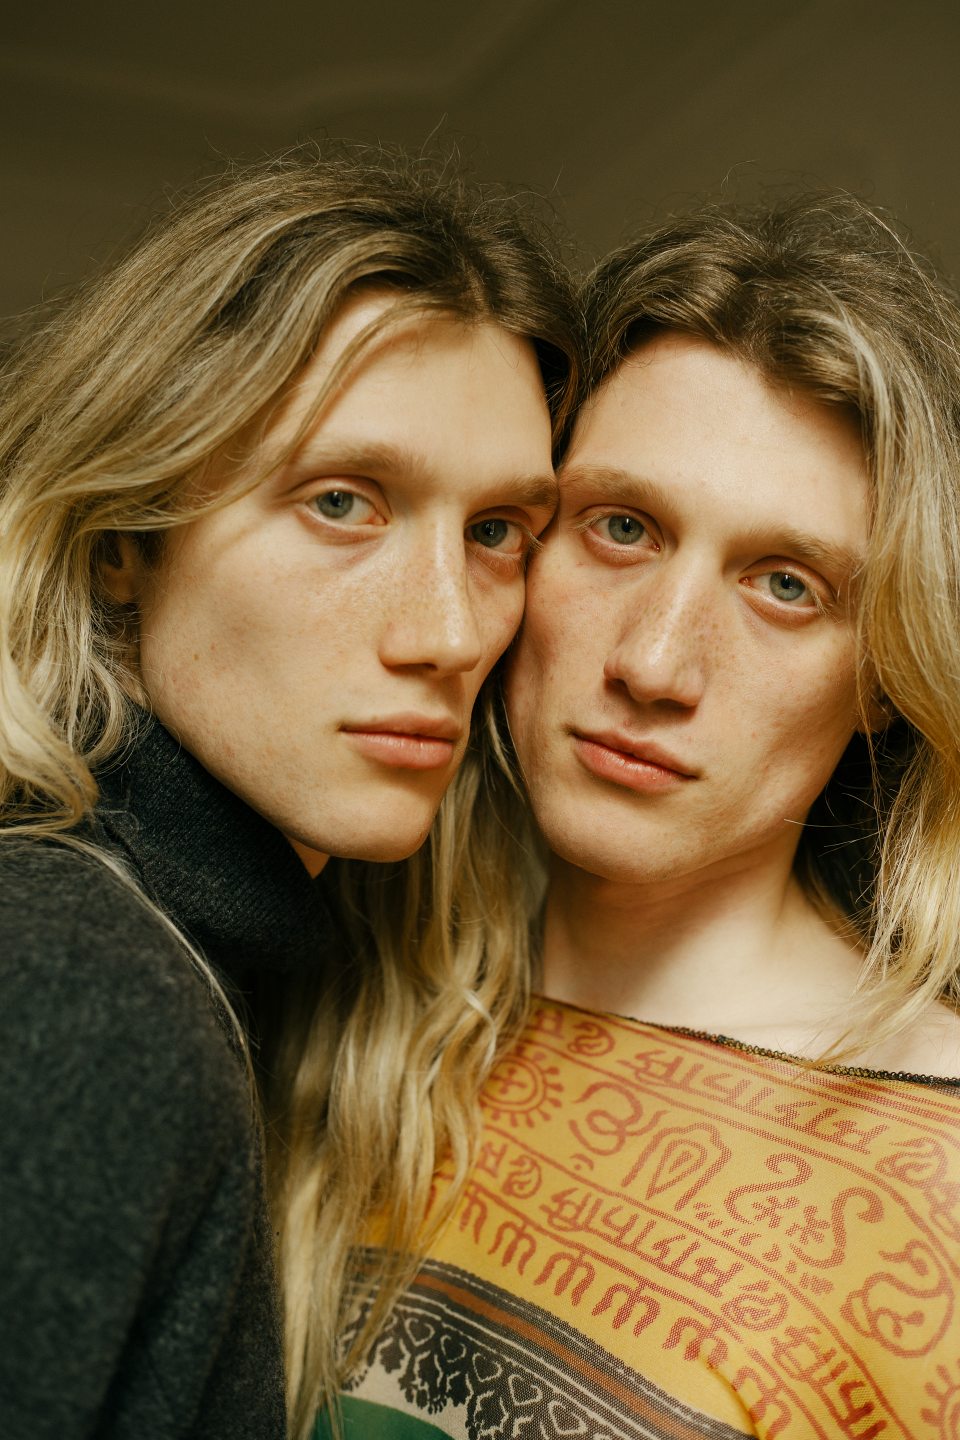 Model: Matteo & NiccolòPorta